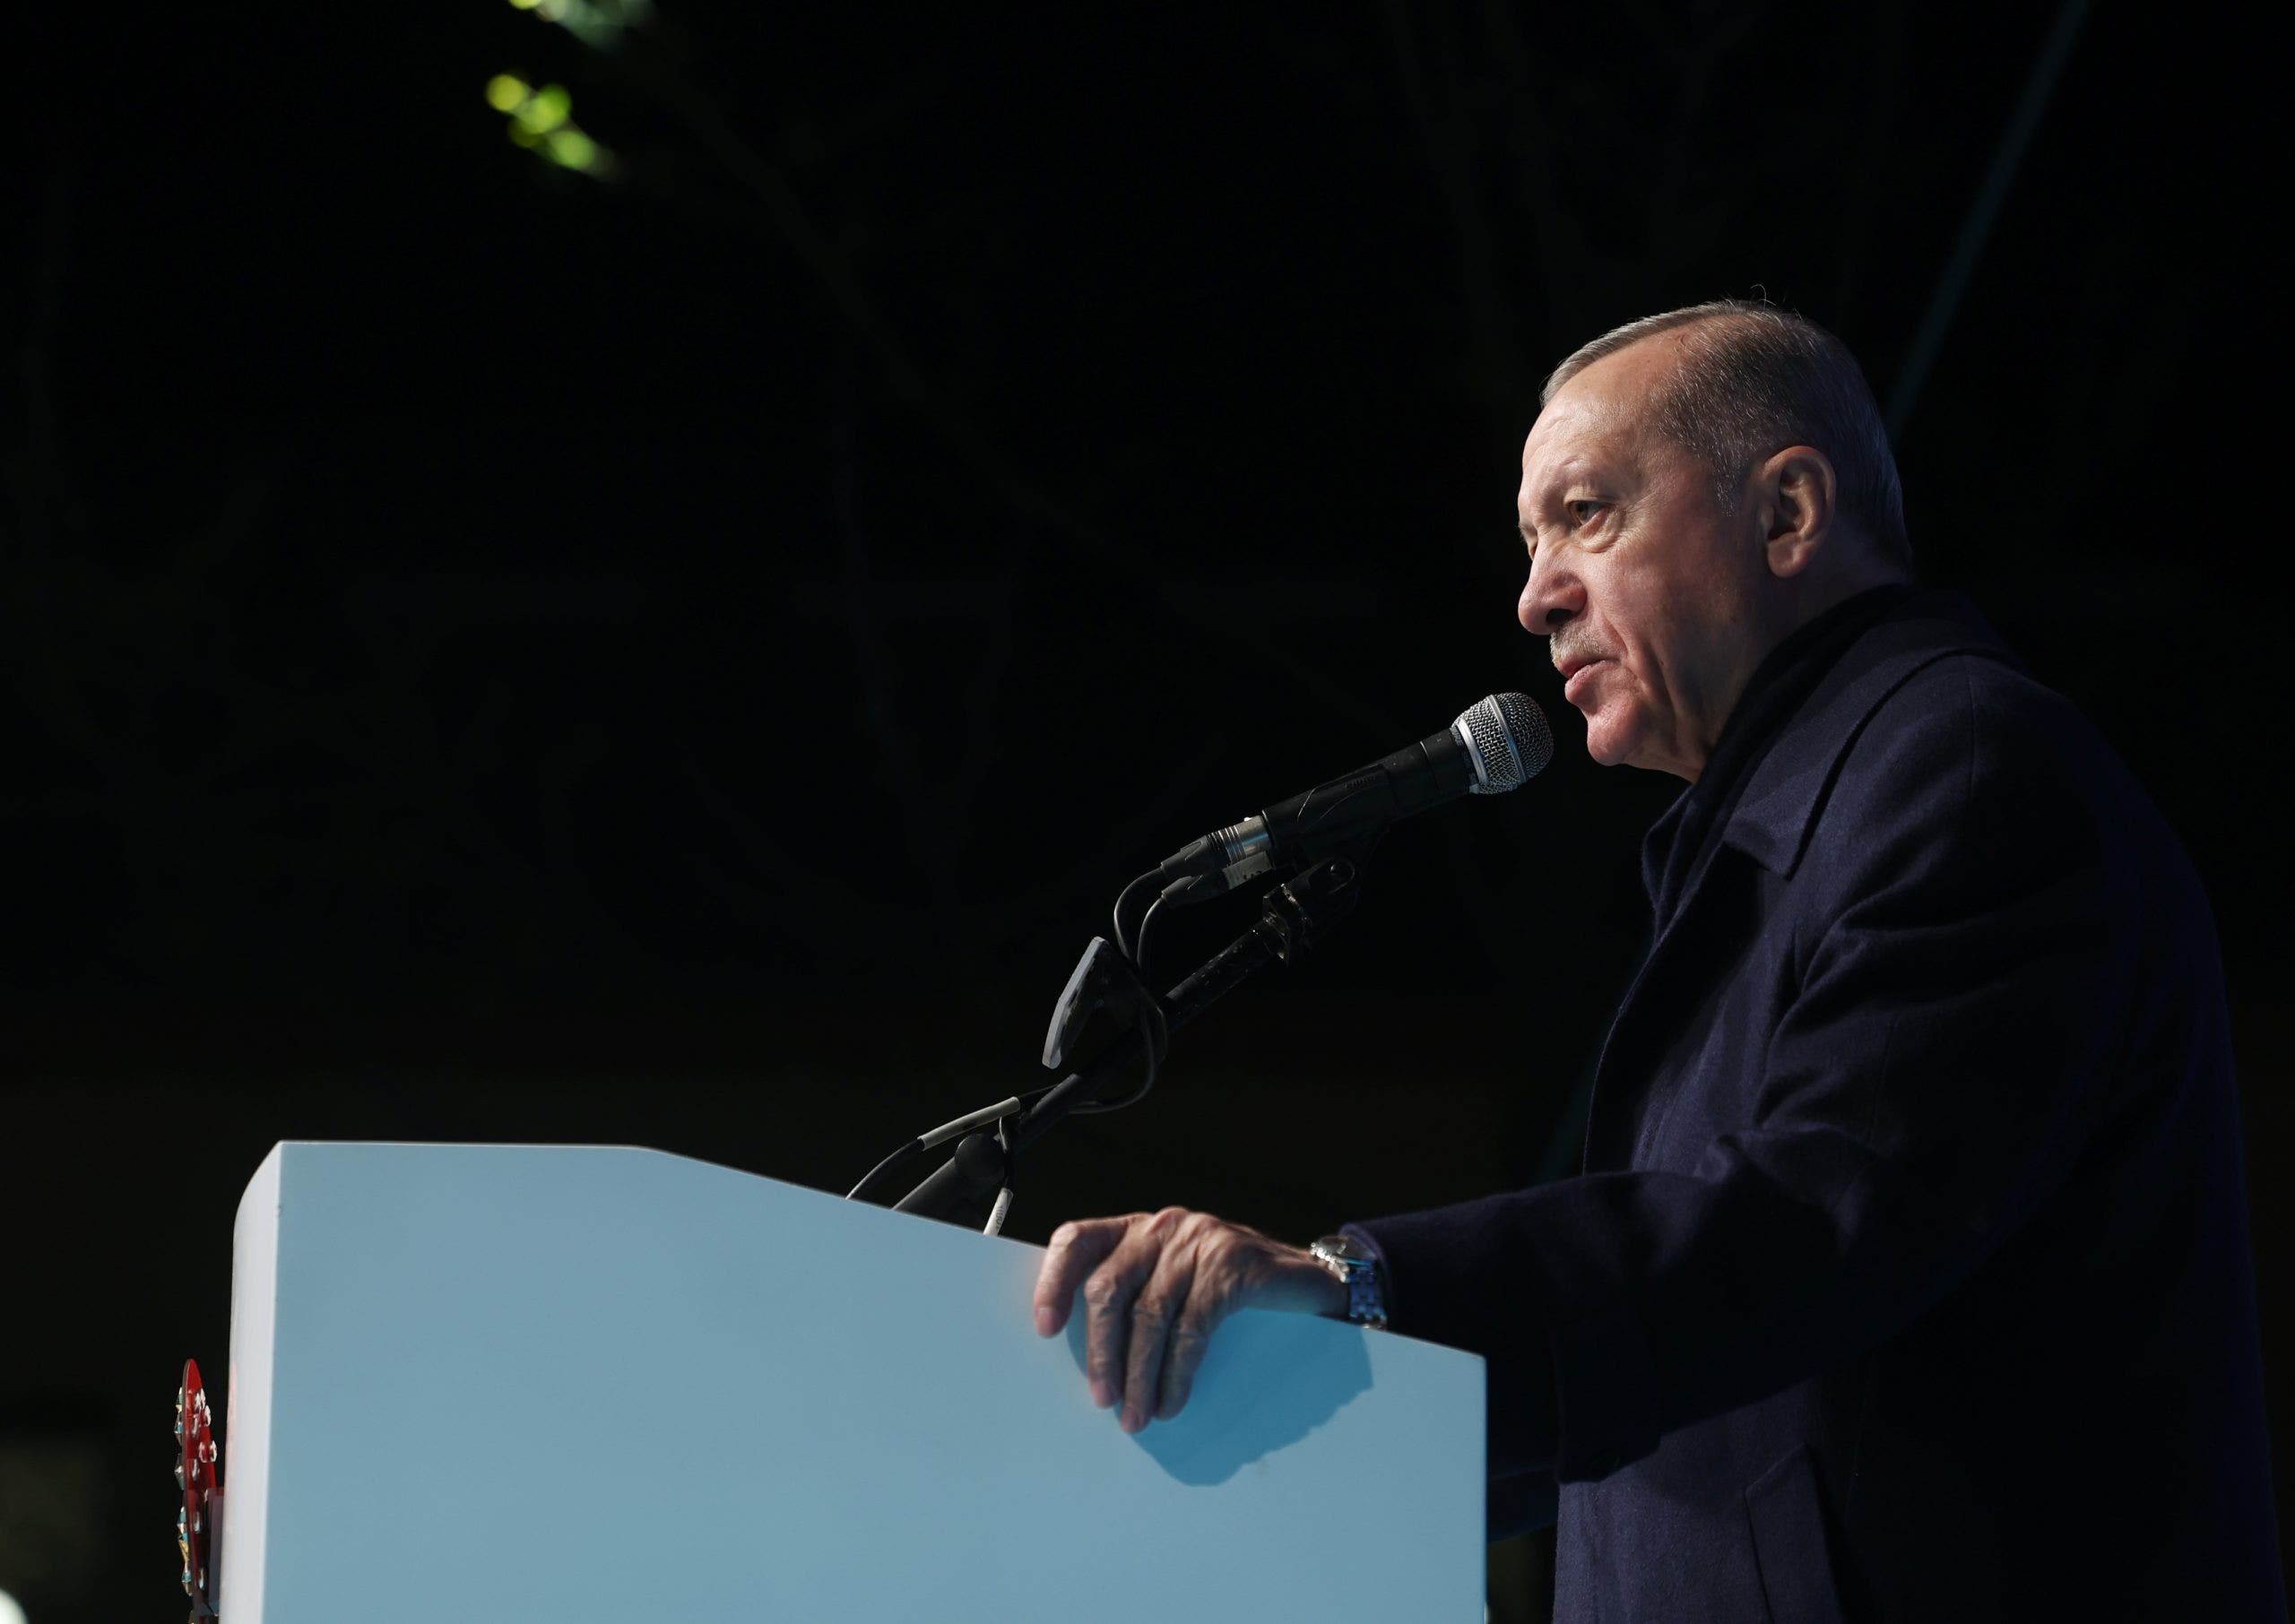 Turkey’s Erdogan faces uncertain future after shock election losses expert says [Video]